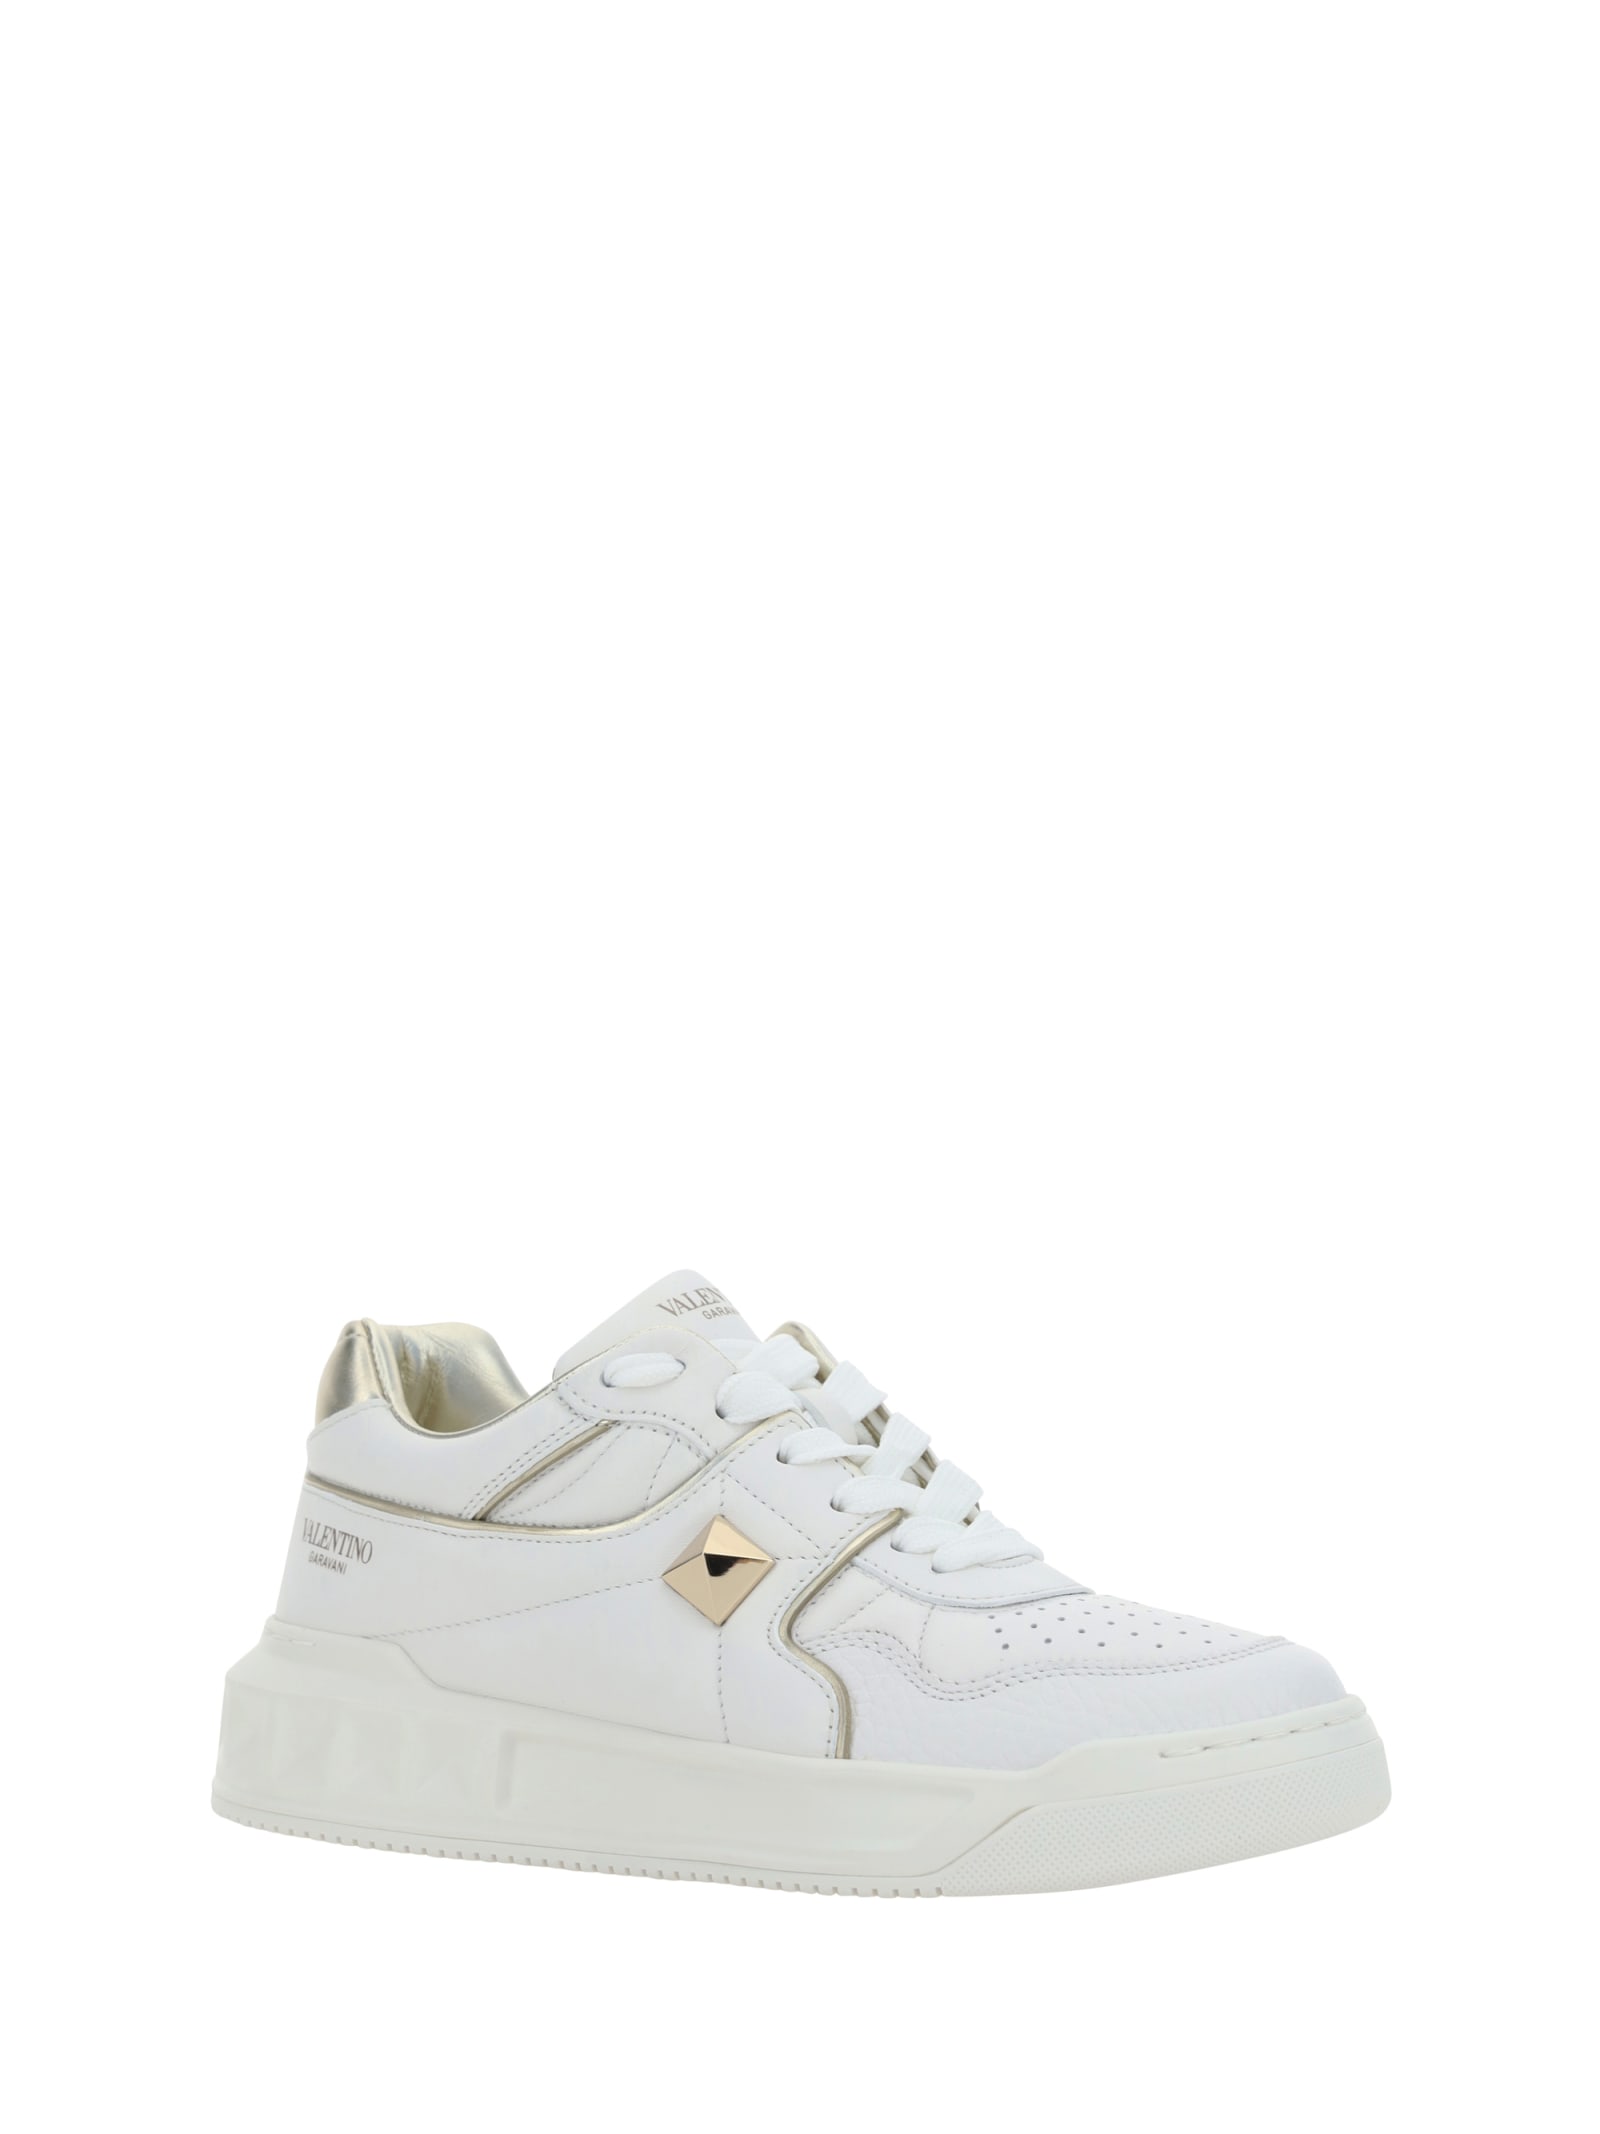 Shop Valentino Sneaker One Stud Nappa/nappa Lam/vit In Bianco/platino/bianco/platino/bianco